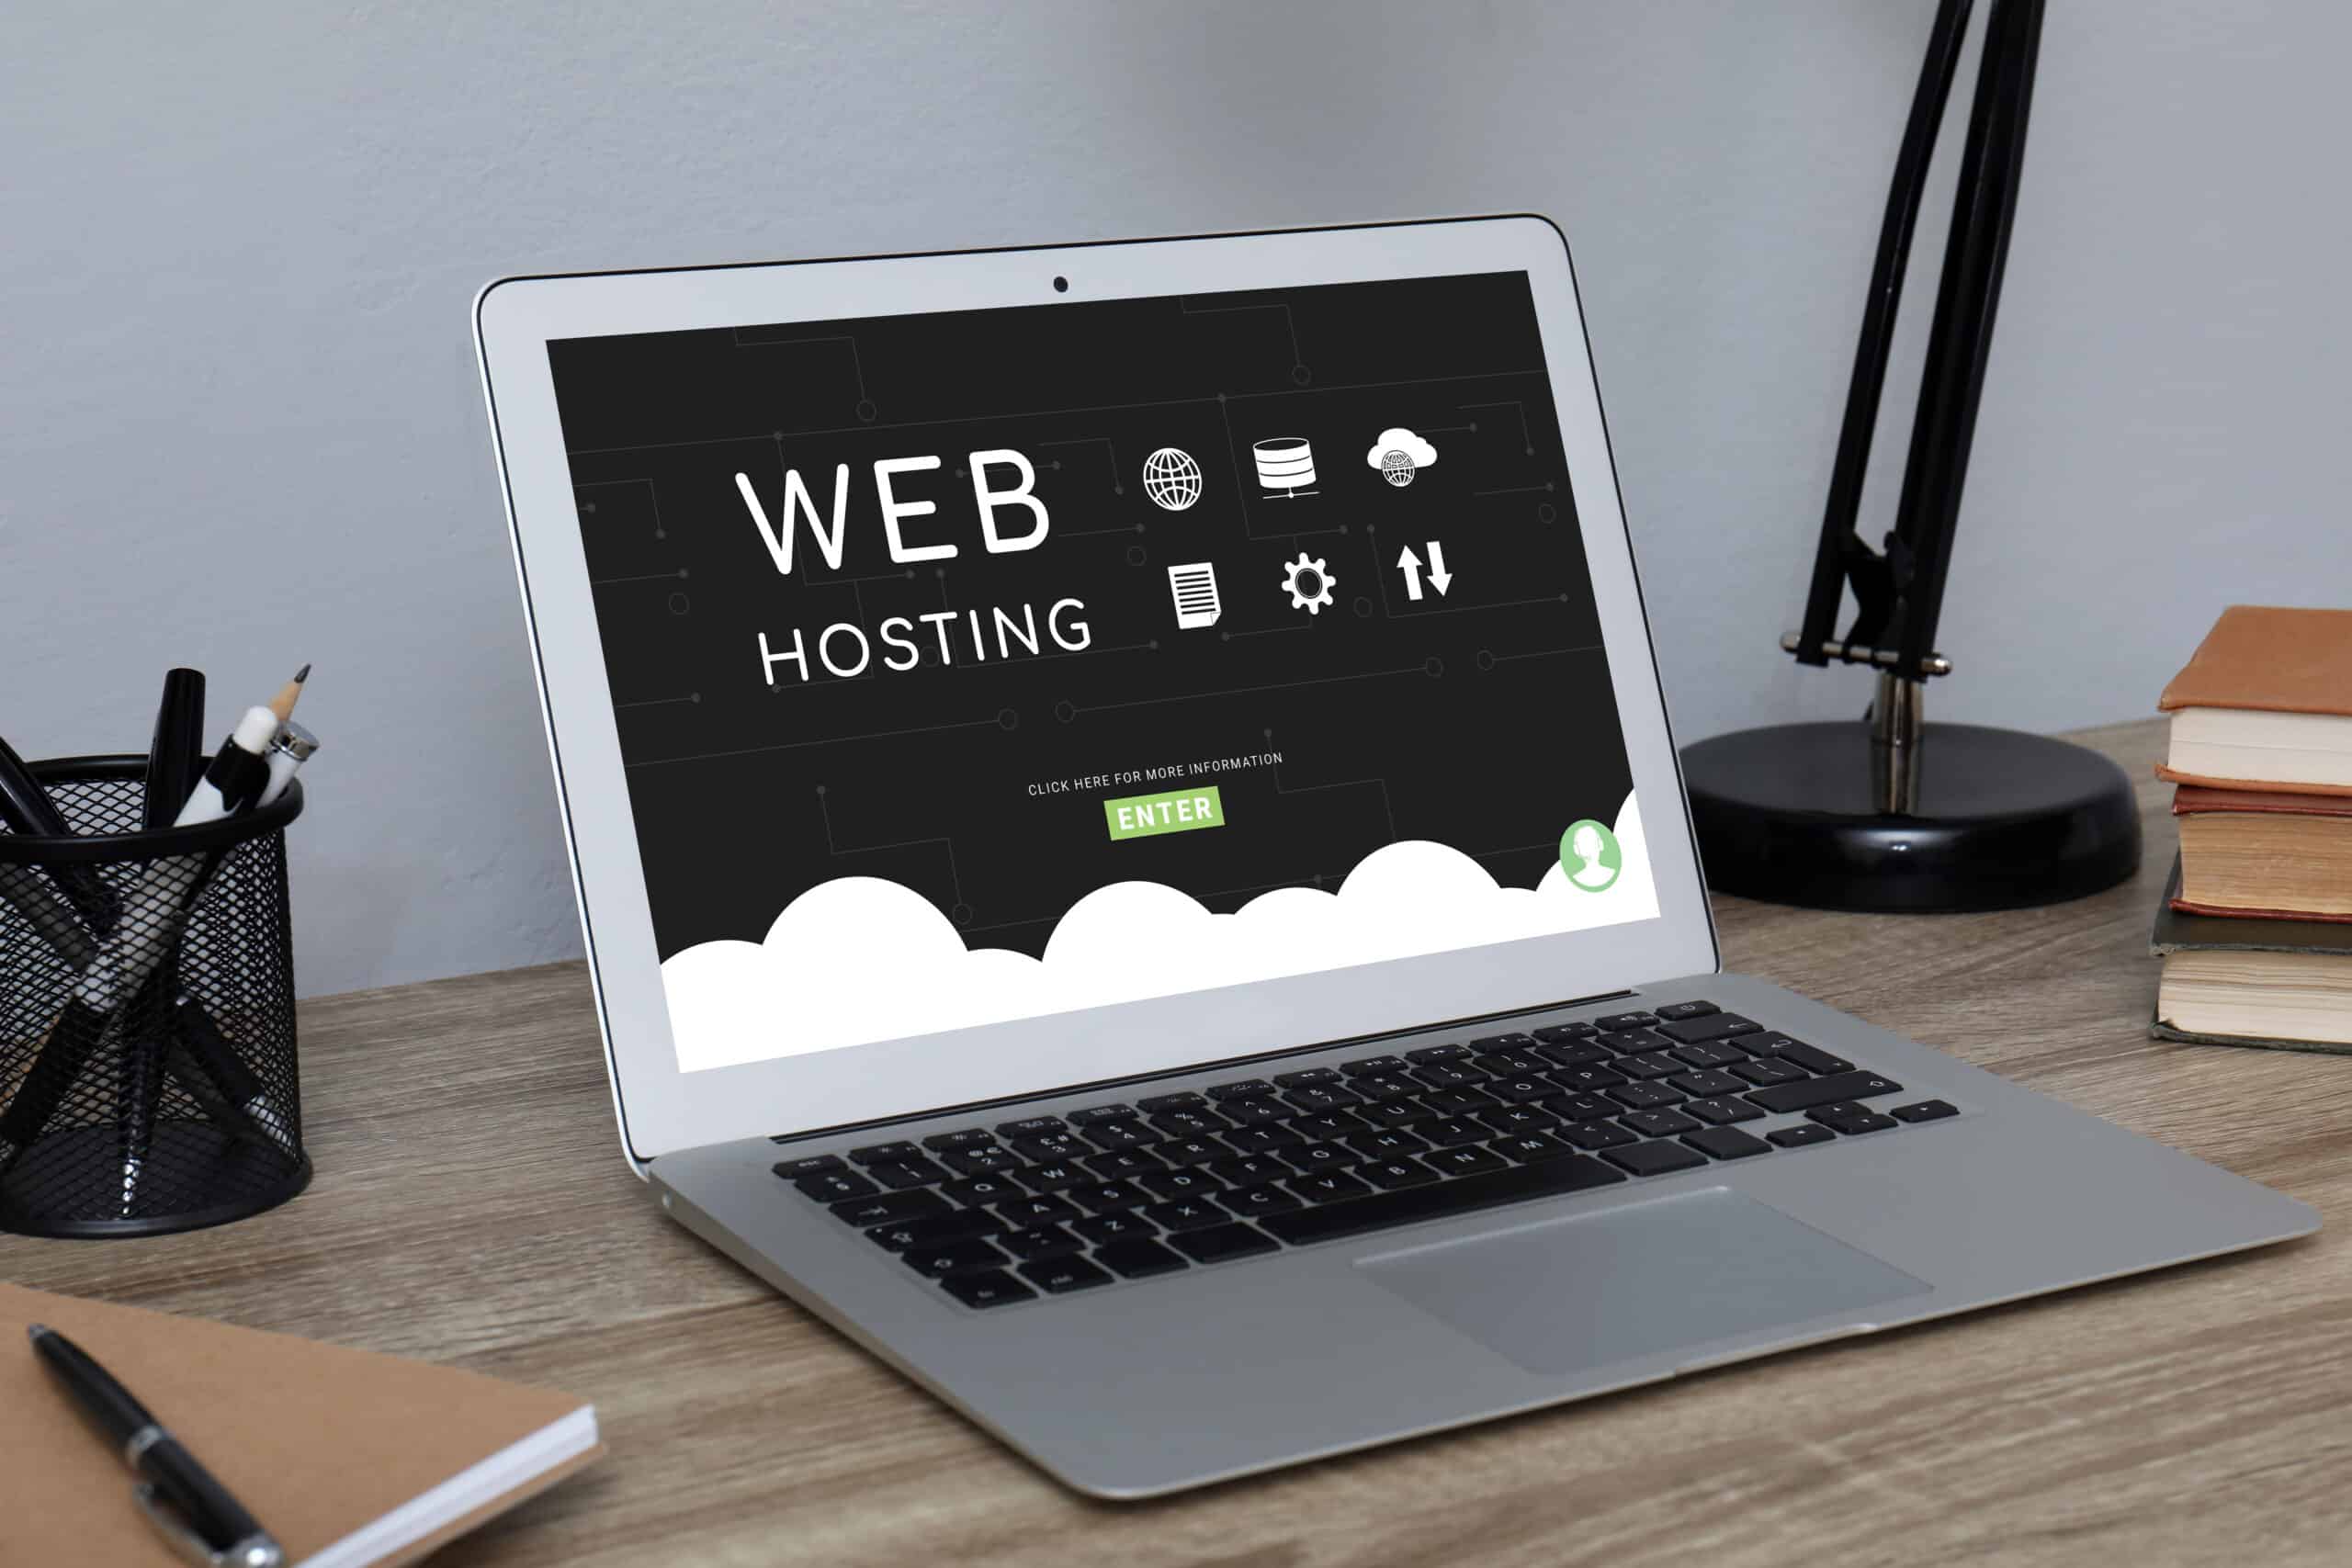 web hosting page on laptop